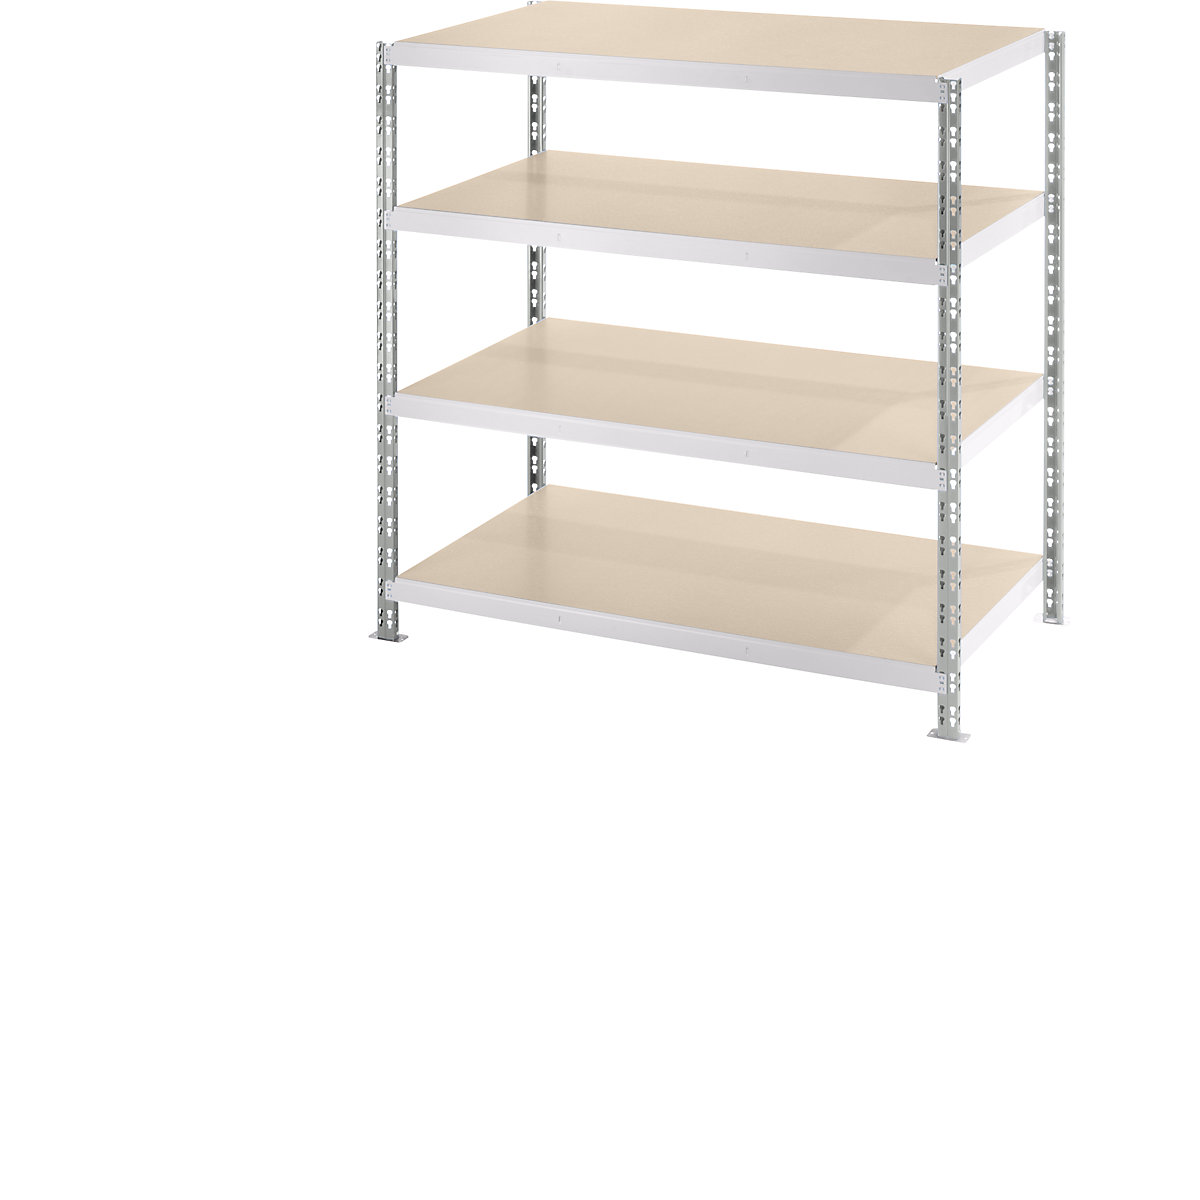 Wide span boltless shelf unit with moulded chipboard shelves, depth 800 mm, standard shelf unit, HxW 1508 x 1550 mm